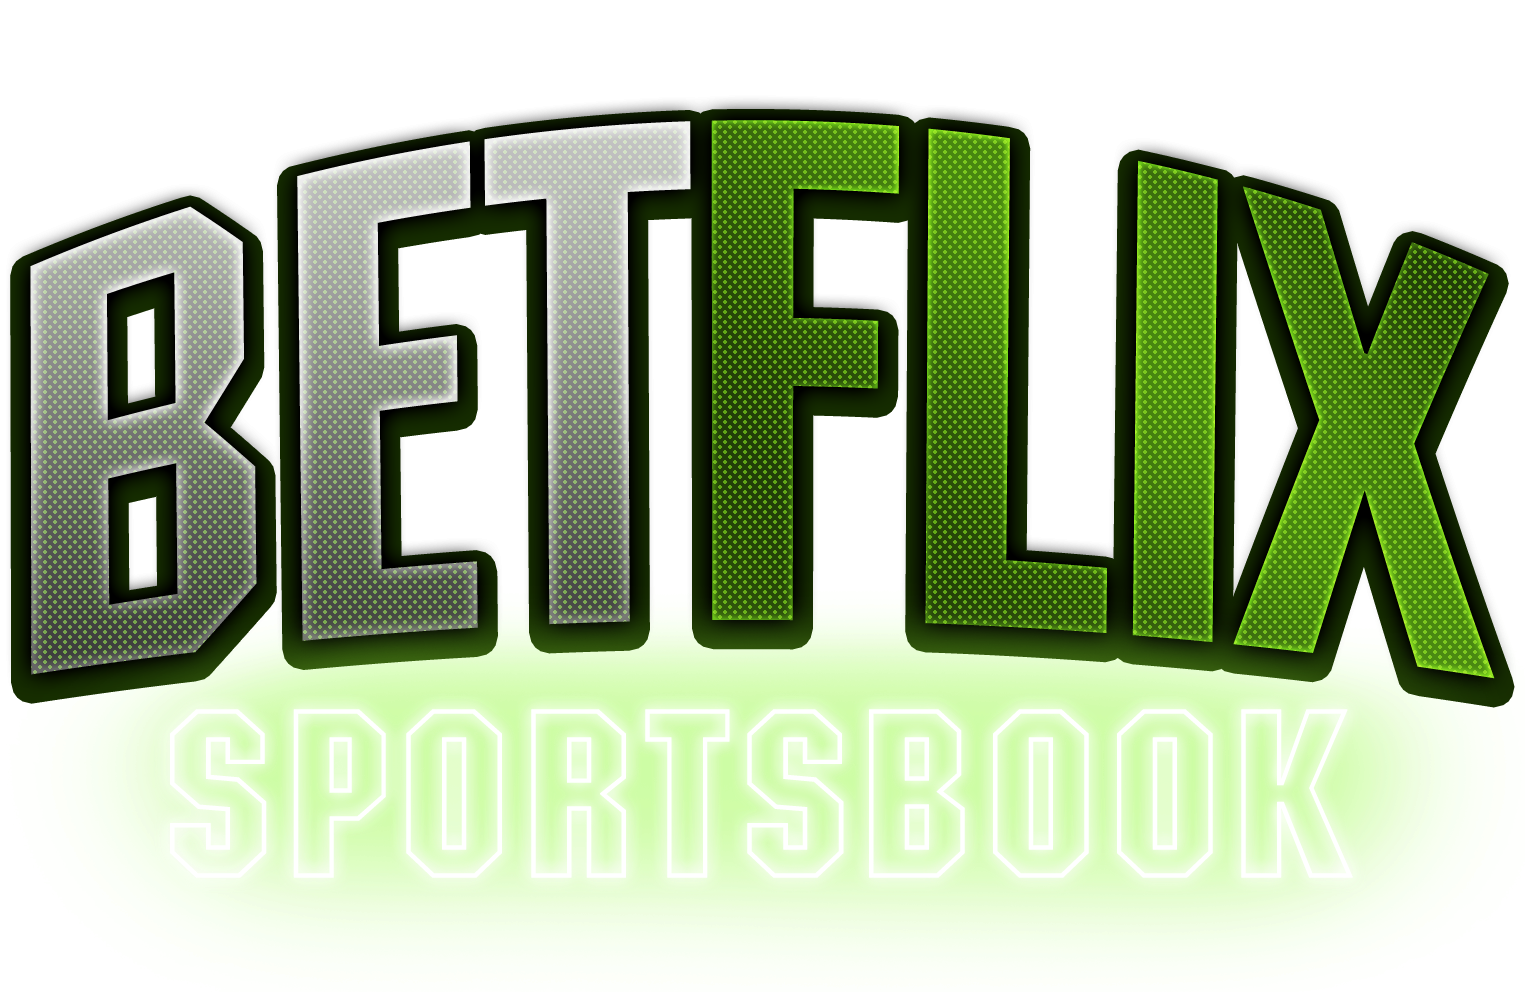 betflixsportsbook